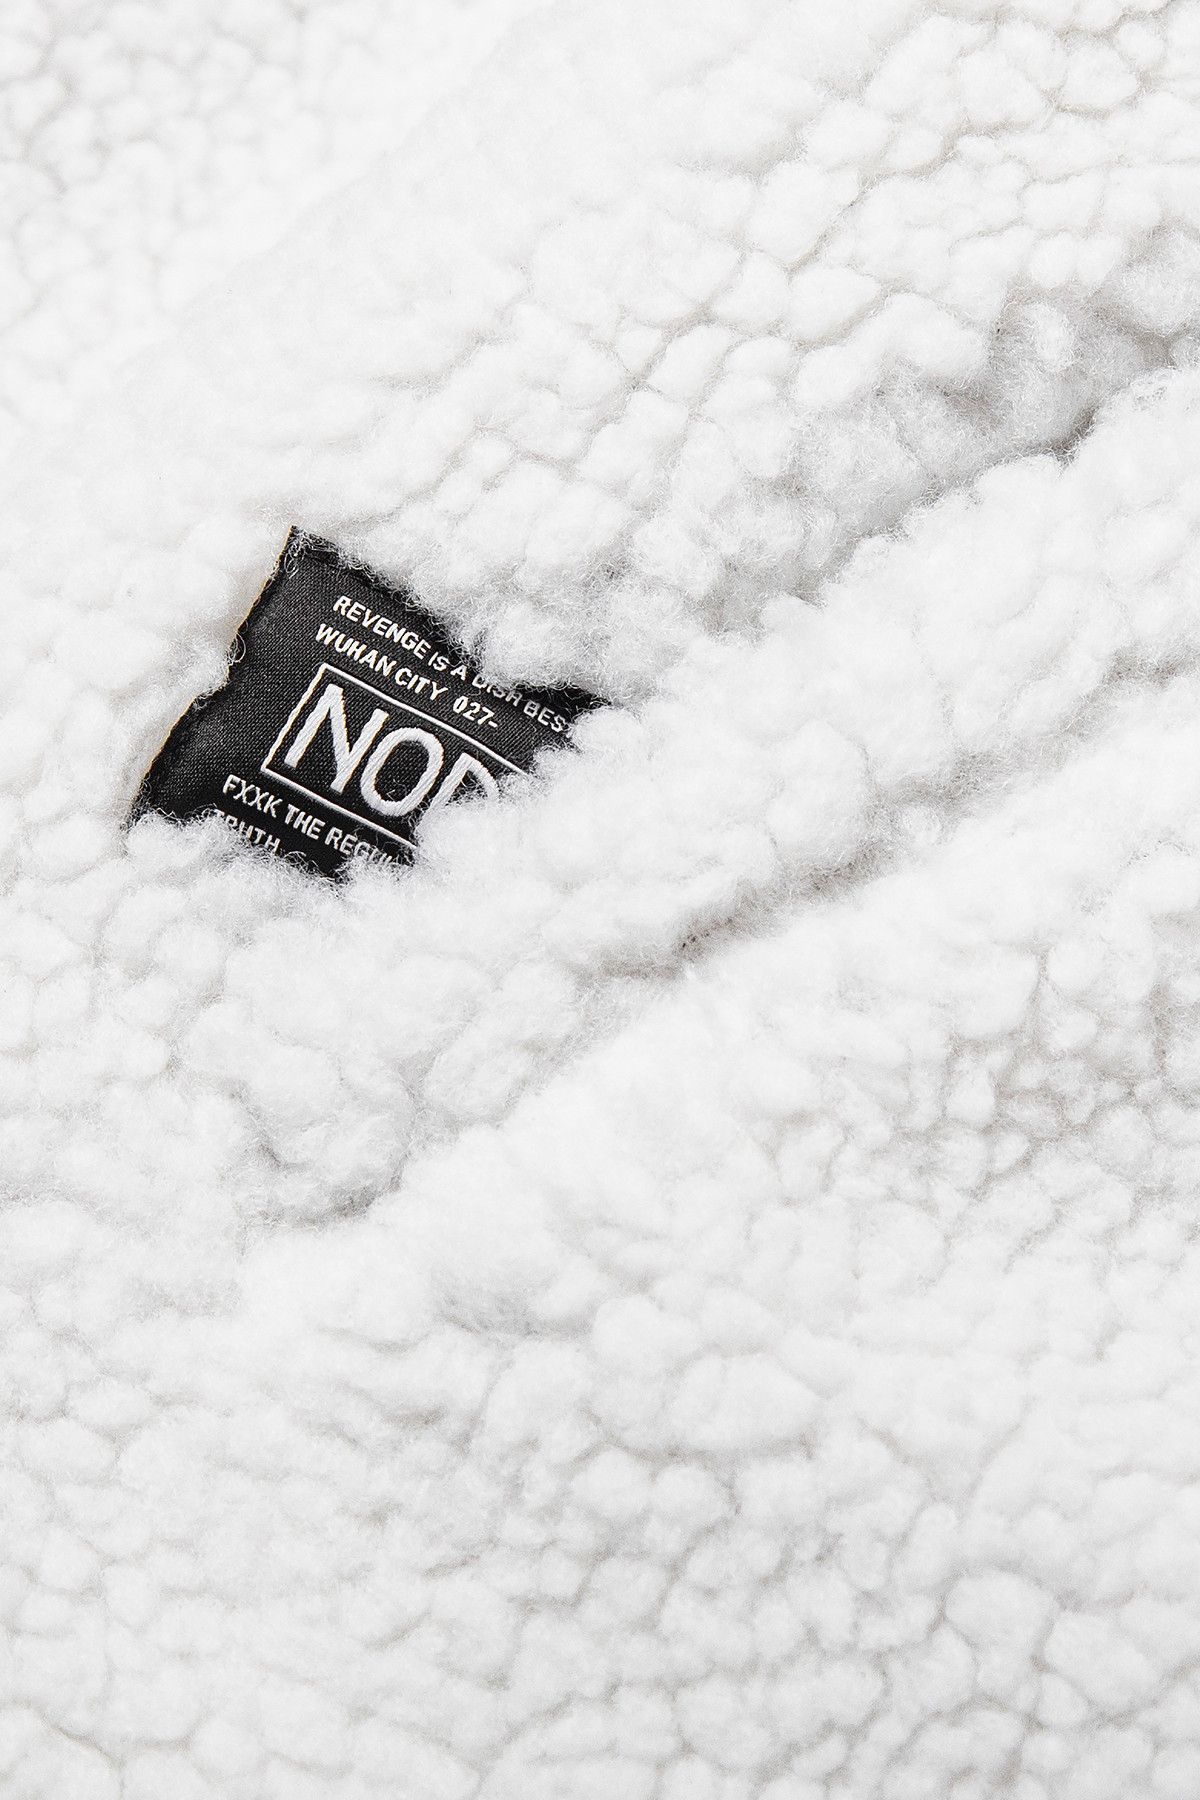 Hype - Nodot: Bebber Fleece NOD Embroidery White Coat Large - 8